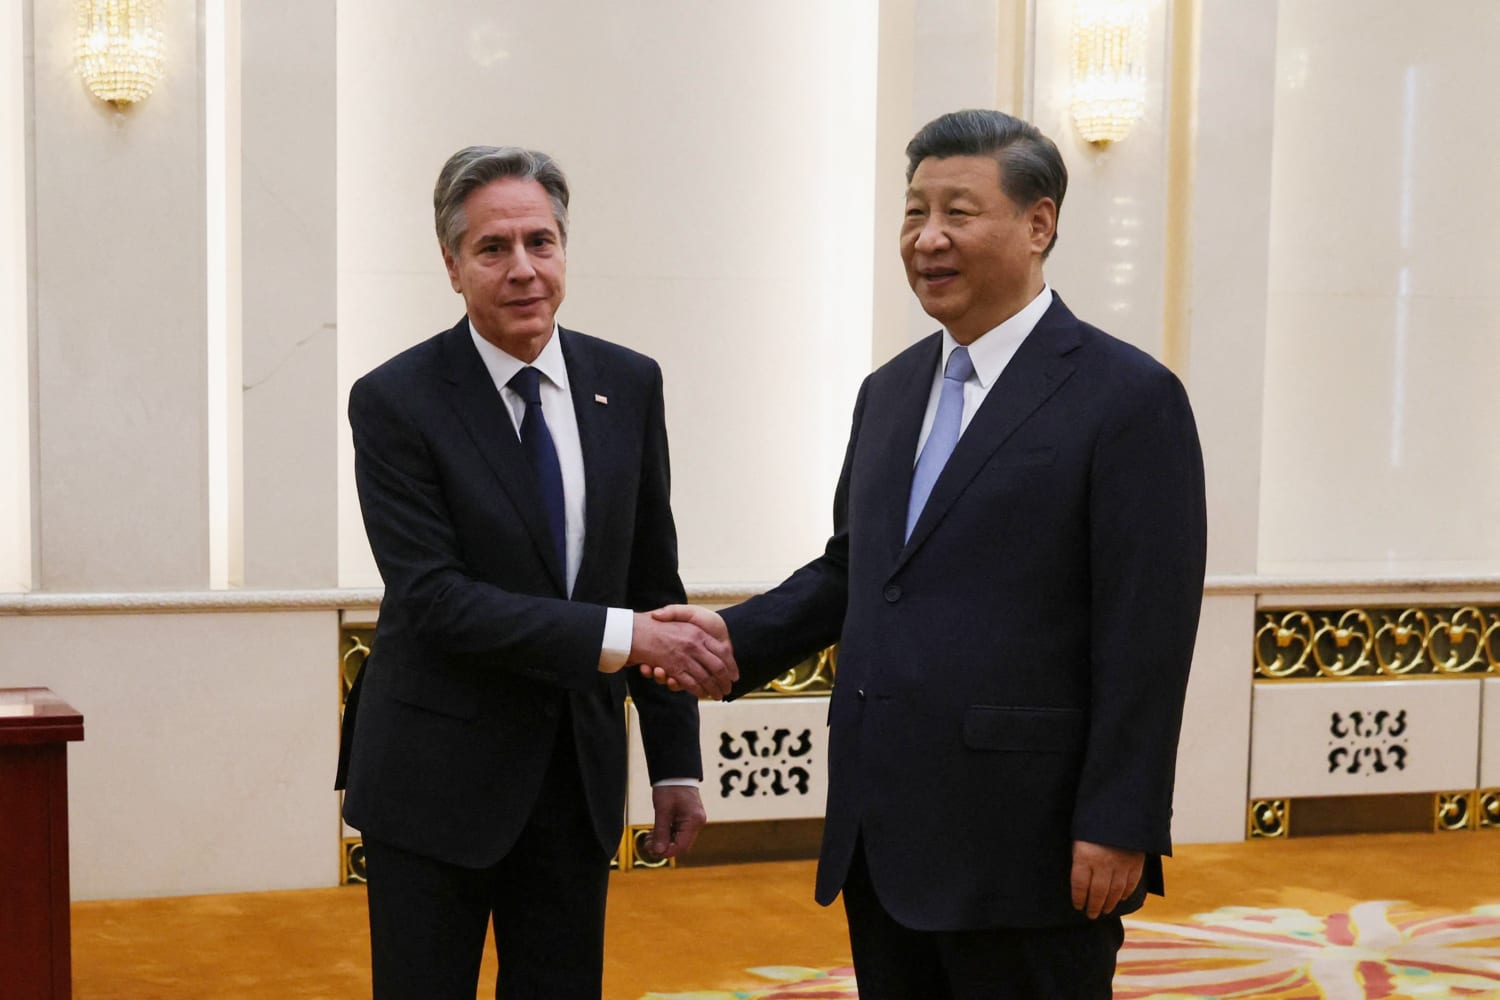 Blinken meets with Xi Jinping in bid to ease China tensions